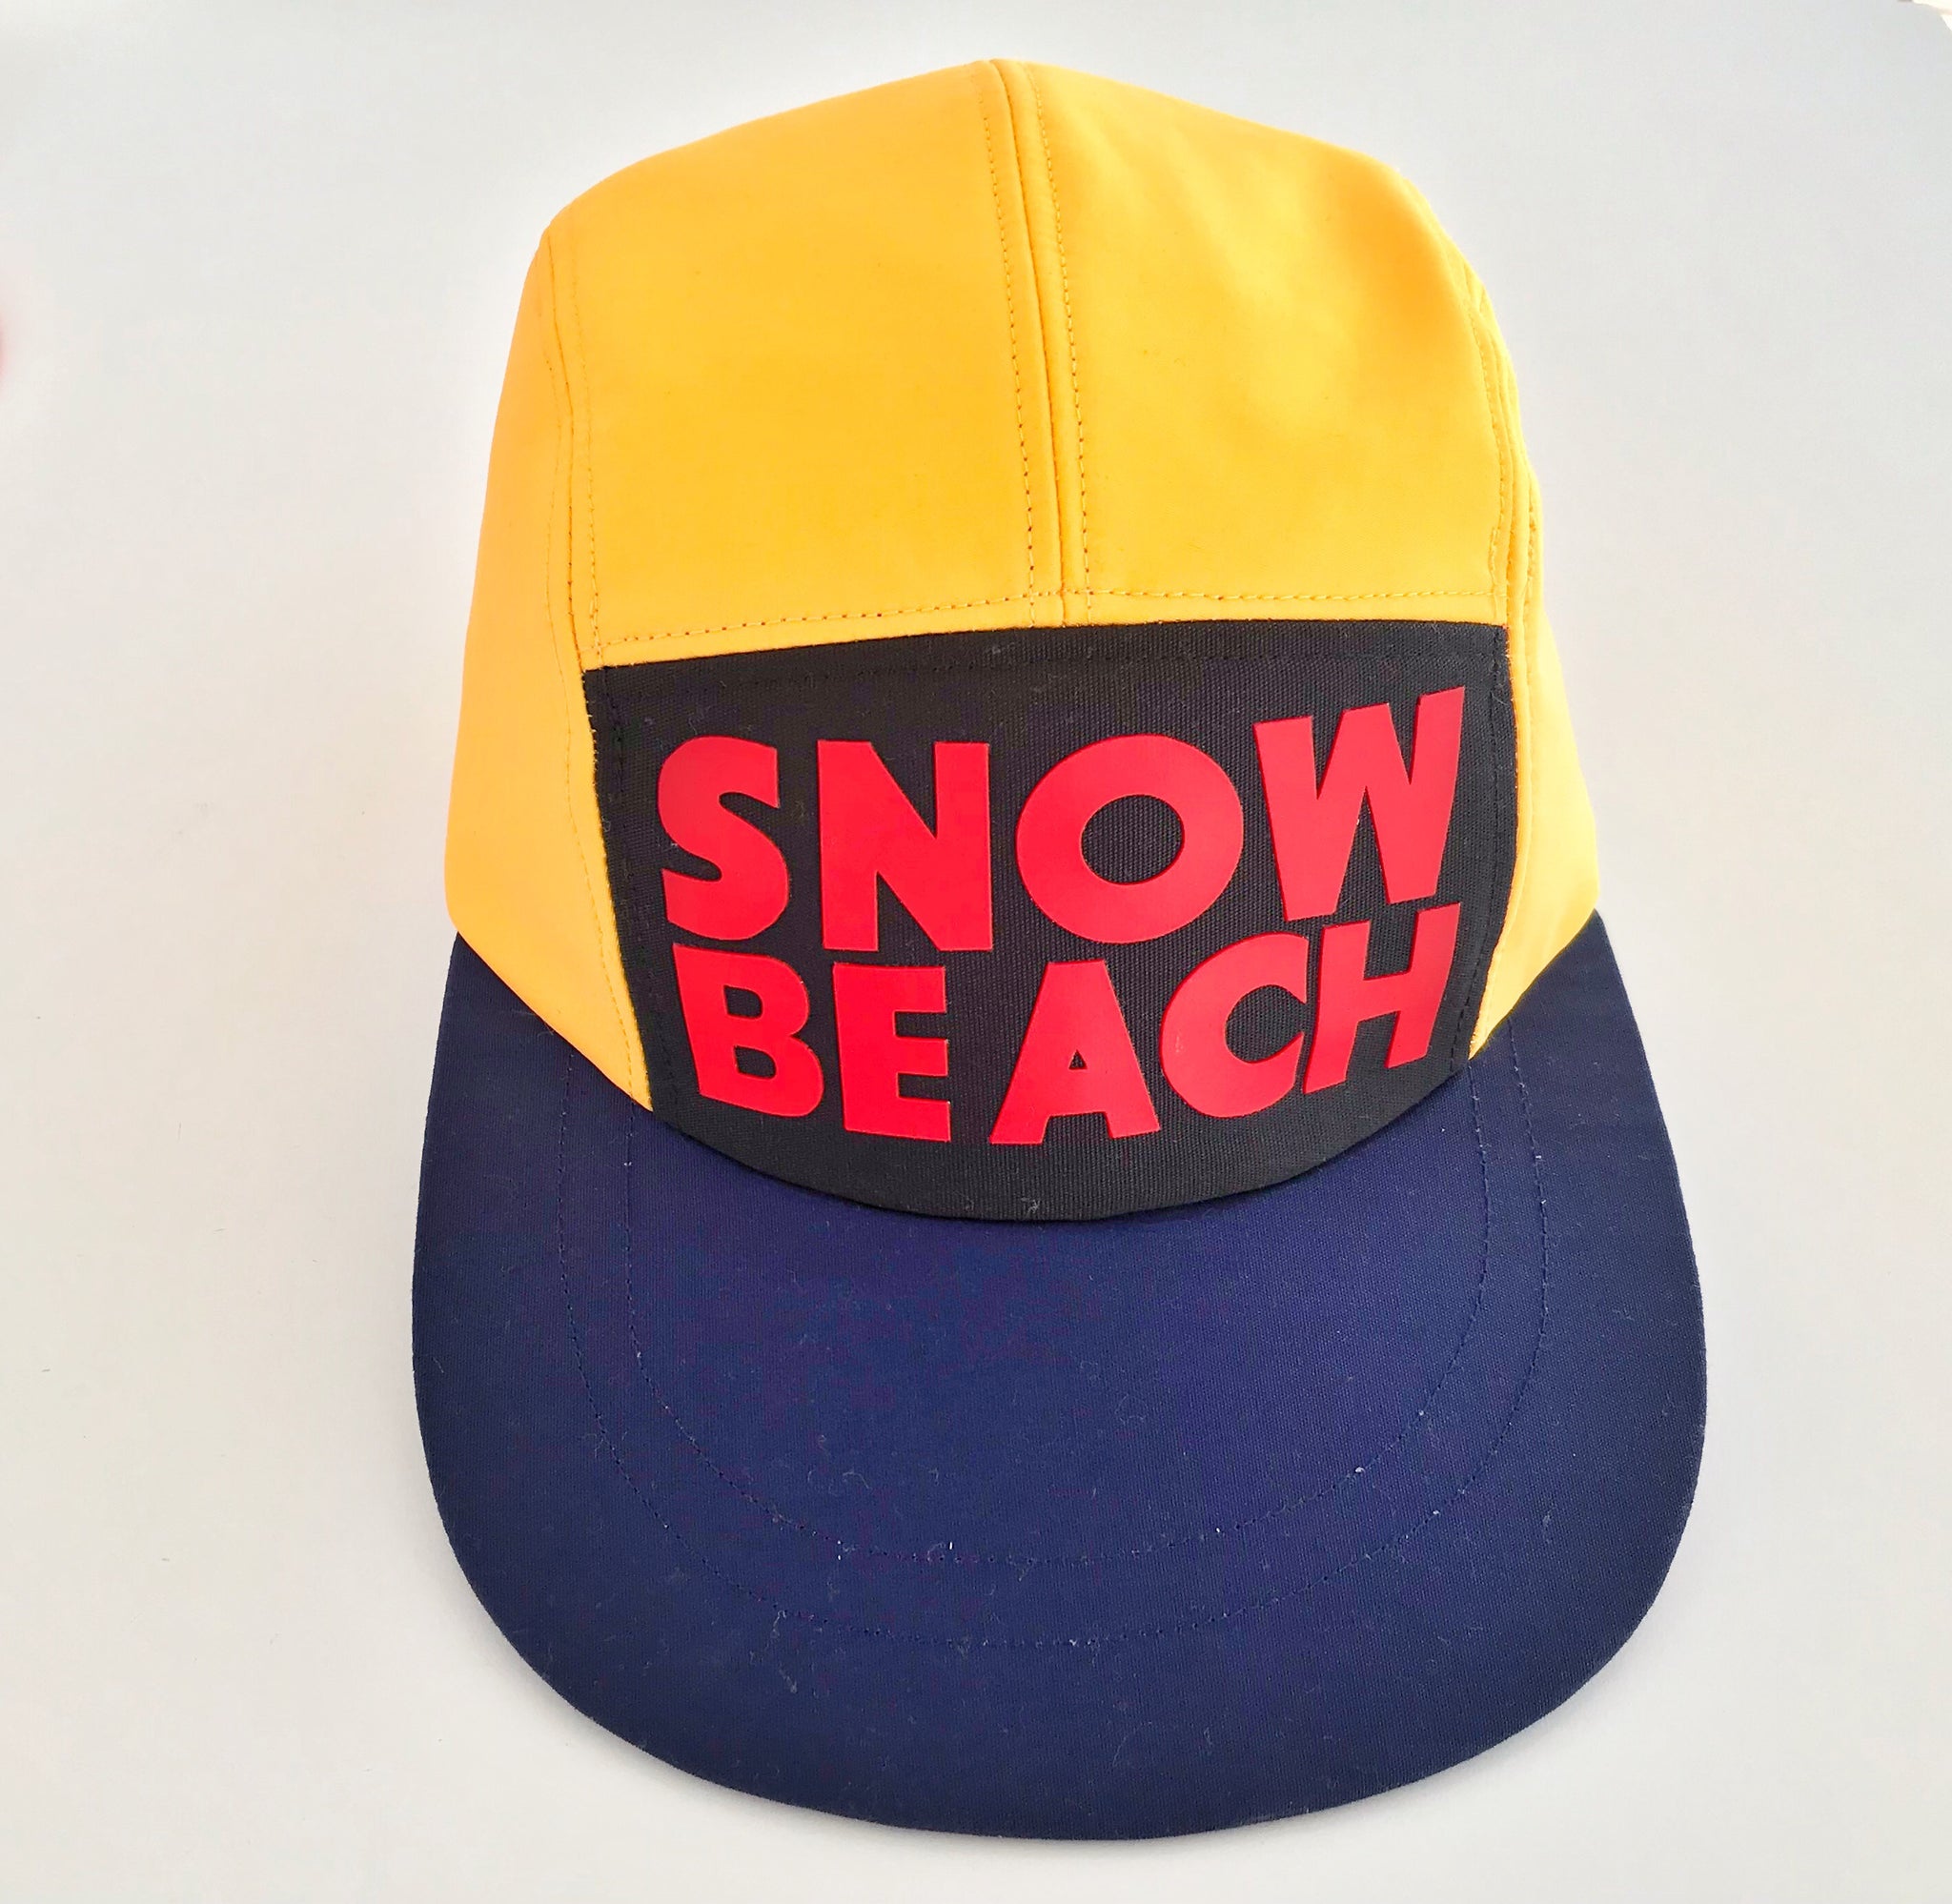 snow beach hat